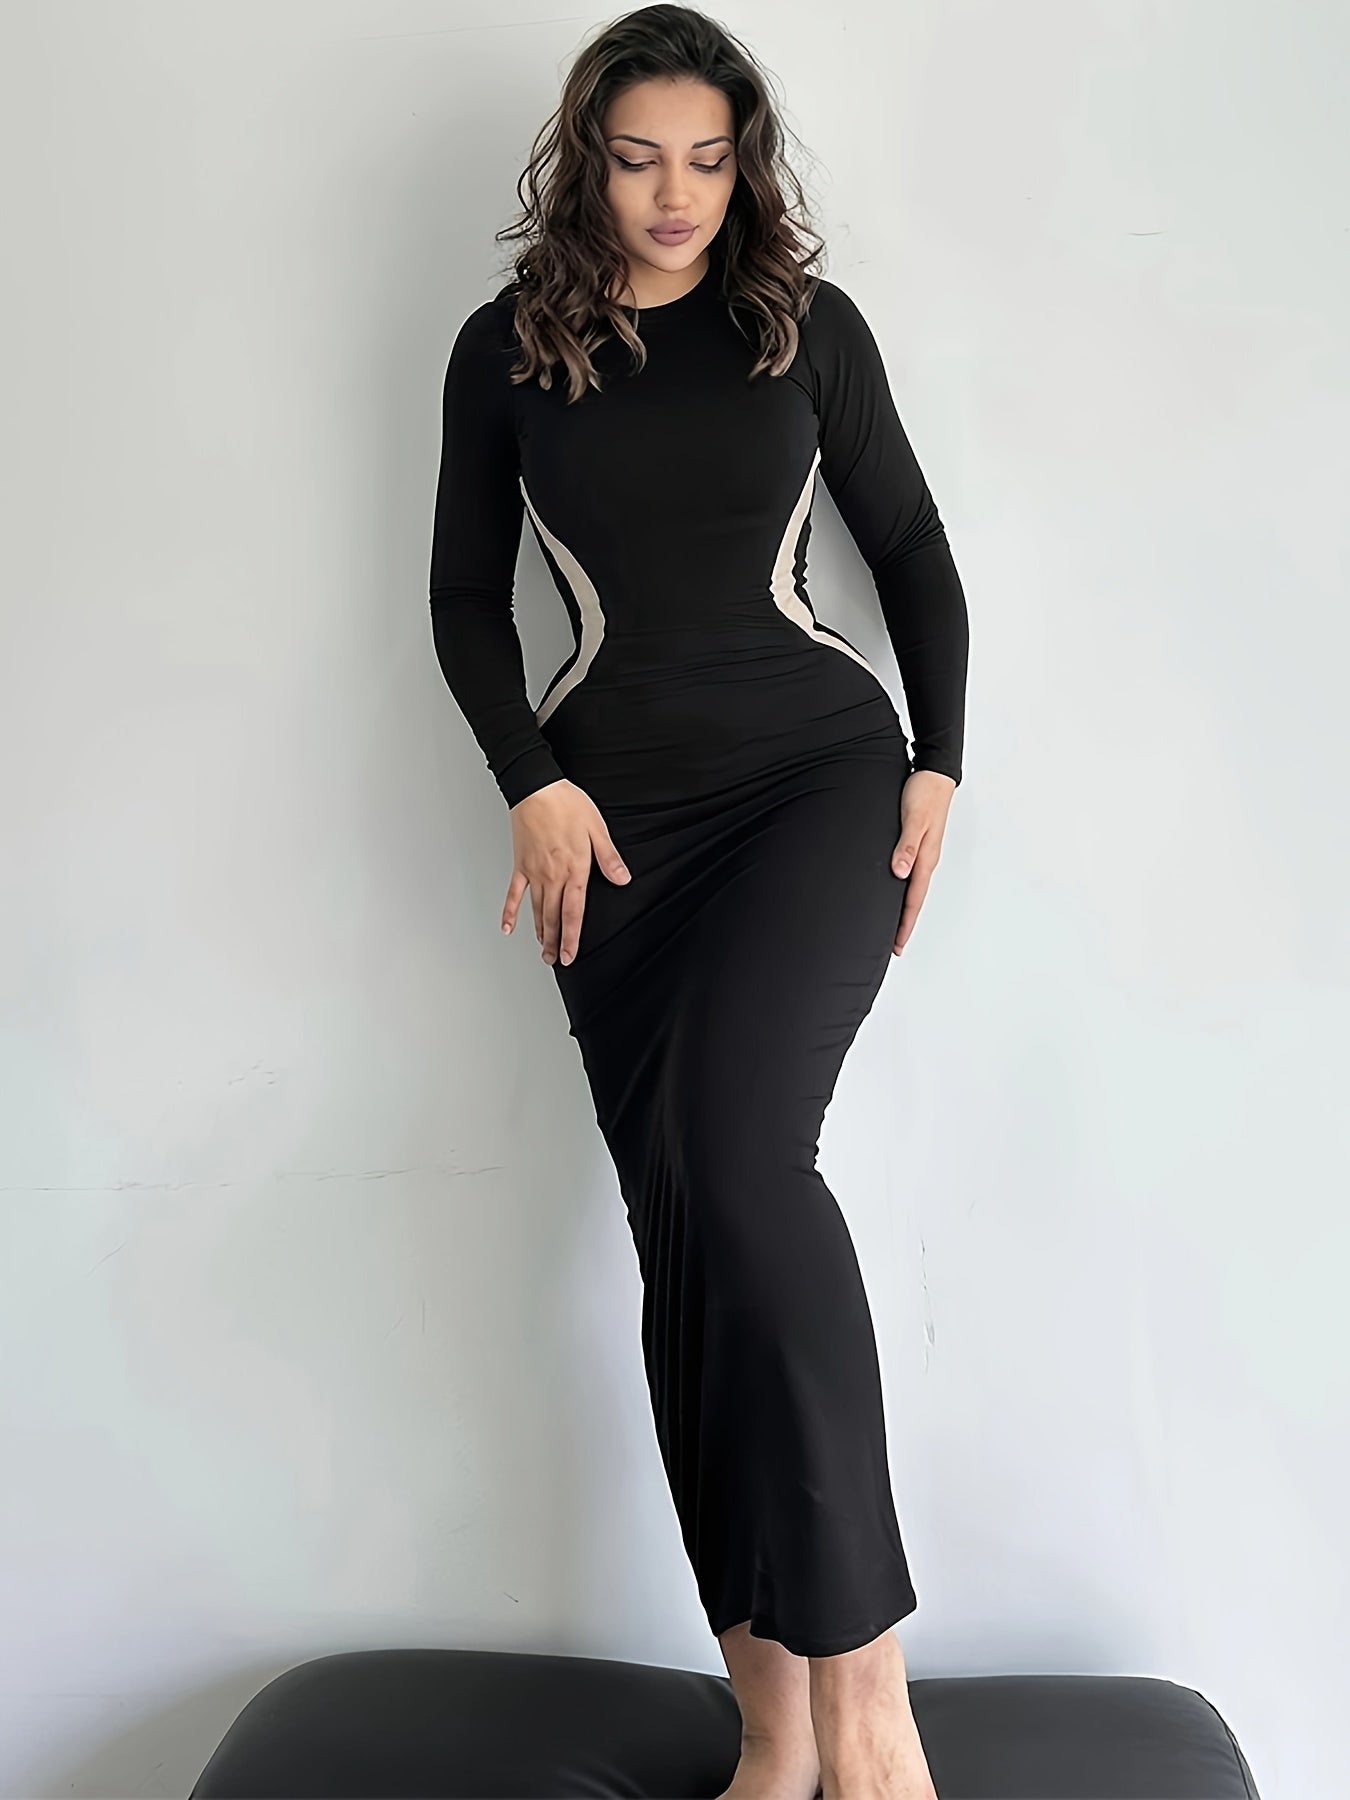 Antmvs Simple Bodycon Dress, Casual Crew Neck Long Sleeve Maxi Dress, Women's Clothing